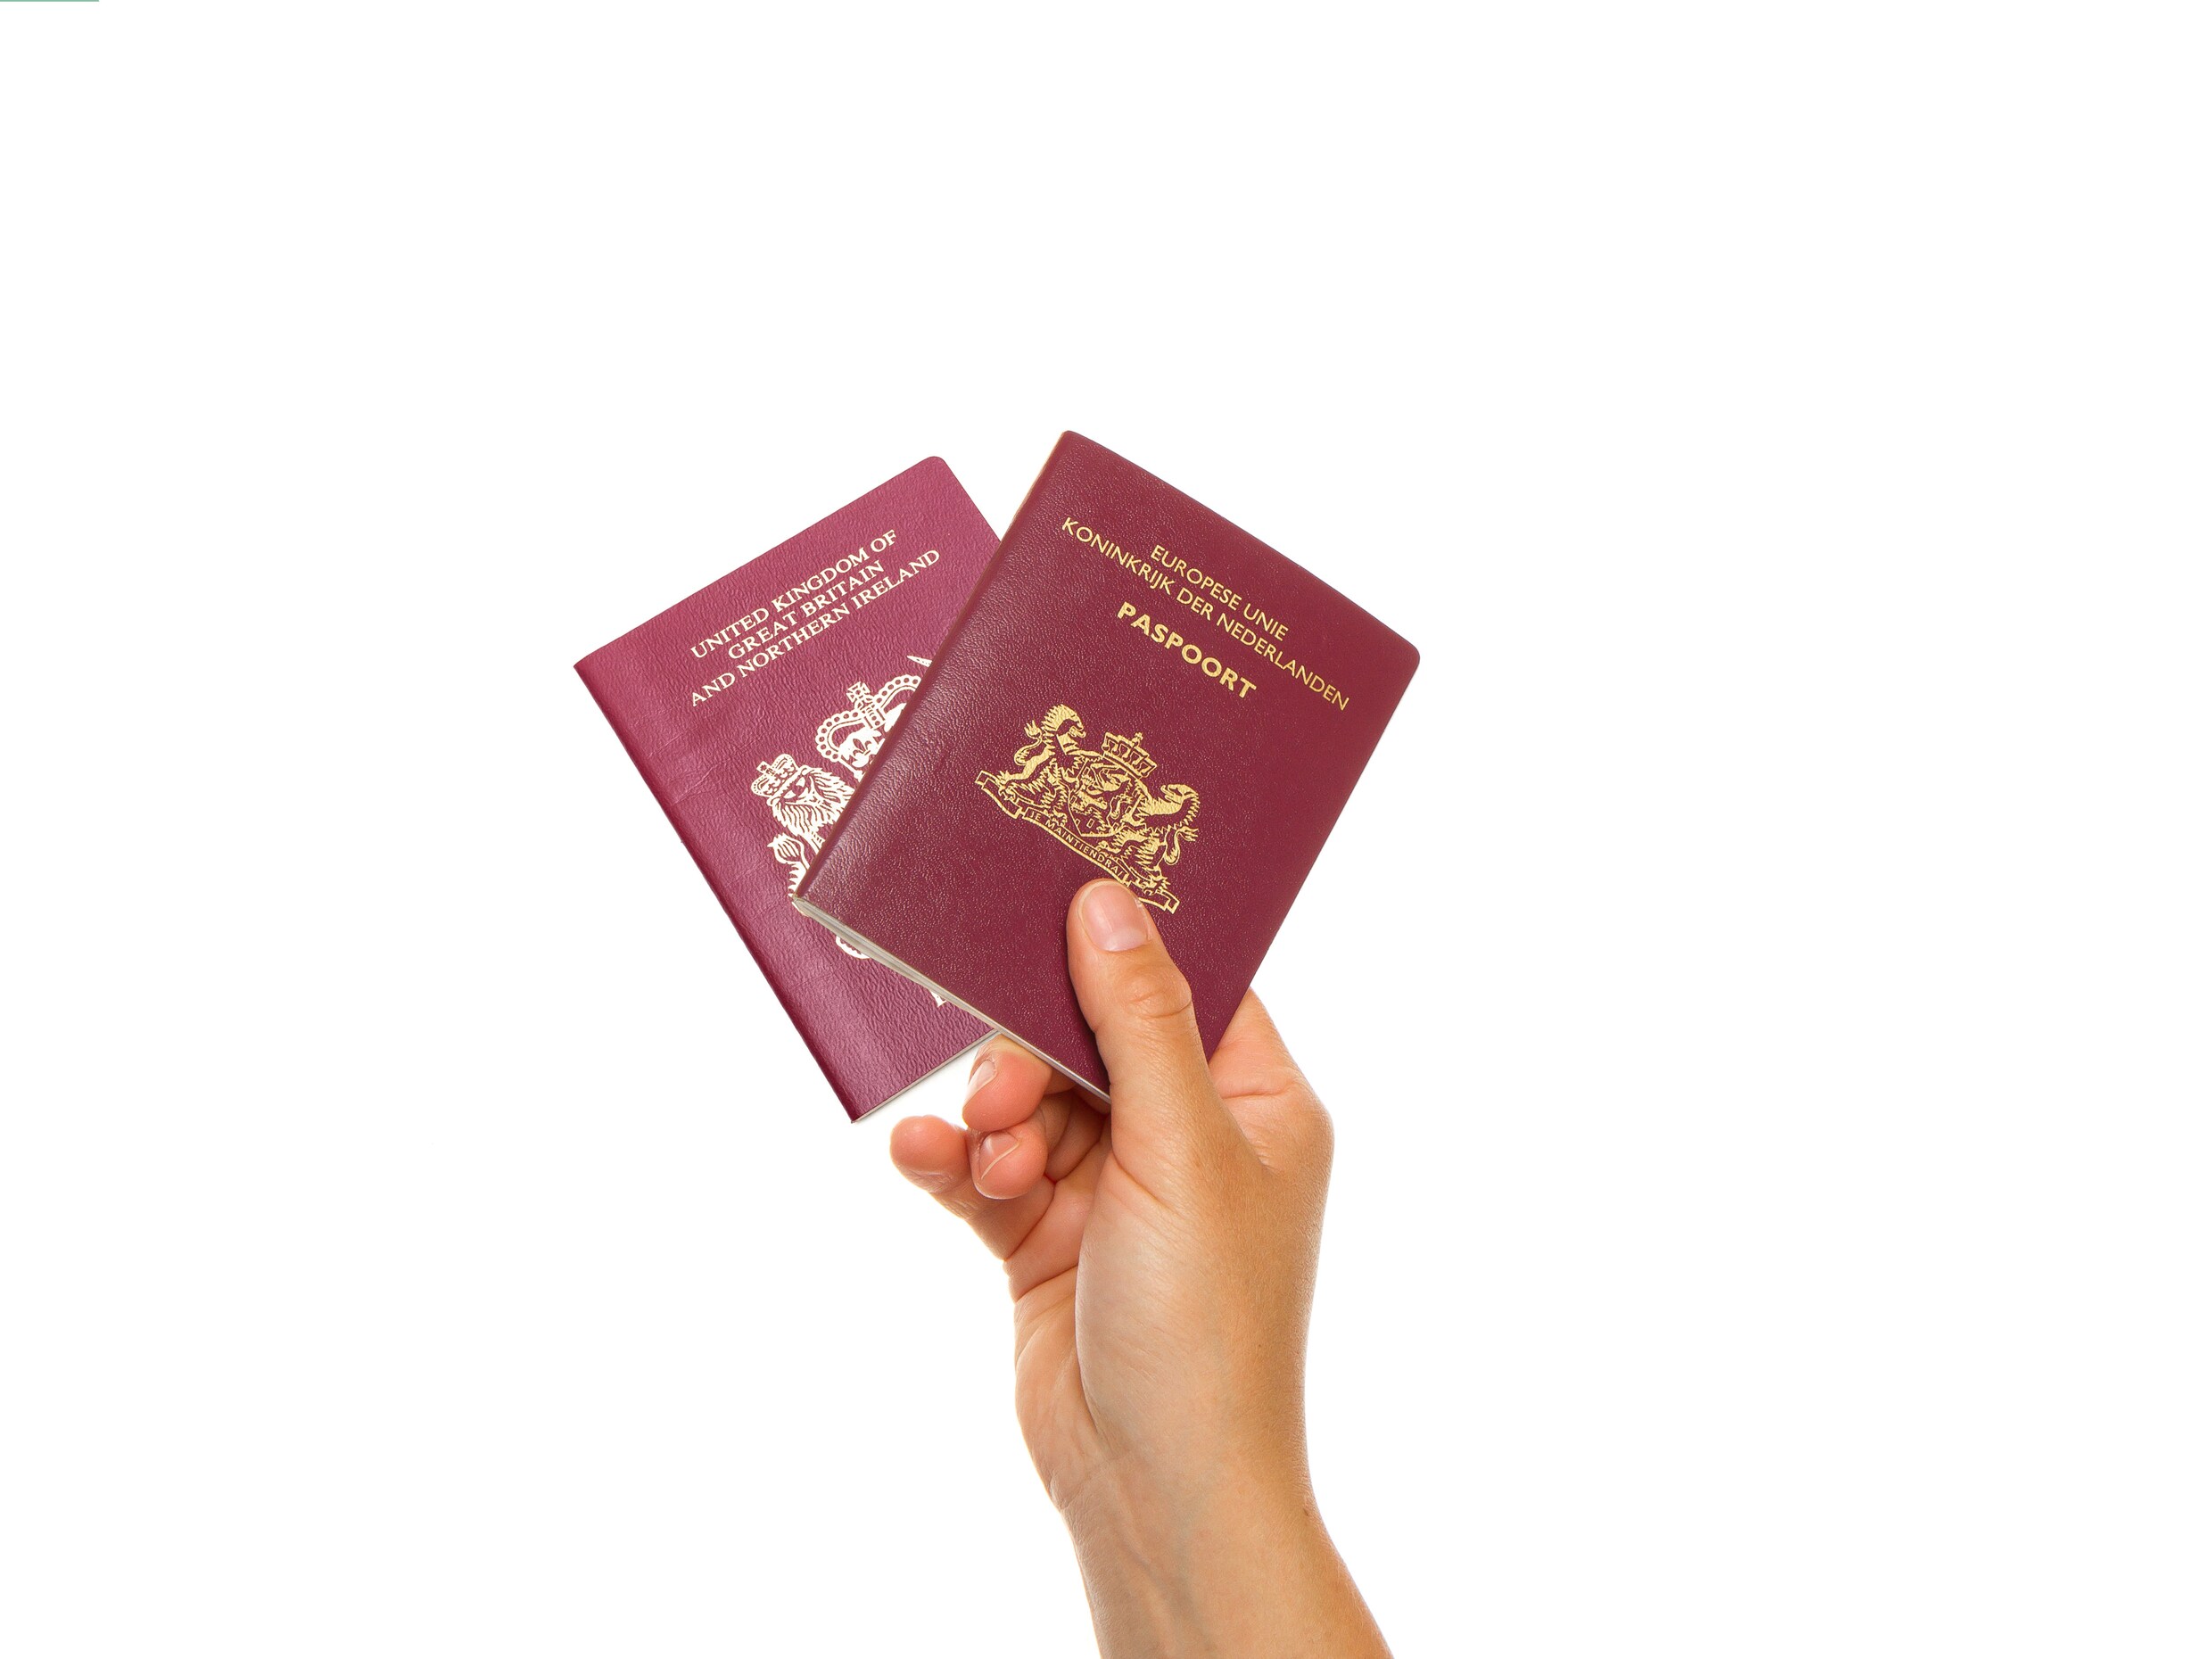 Meerderheid Kamer wil dubbel paspoort voor Nederlanders in Groot-Brittannië